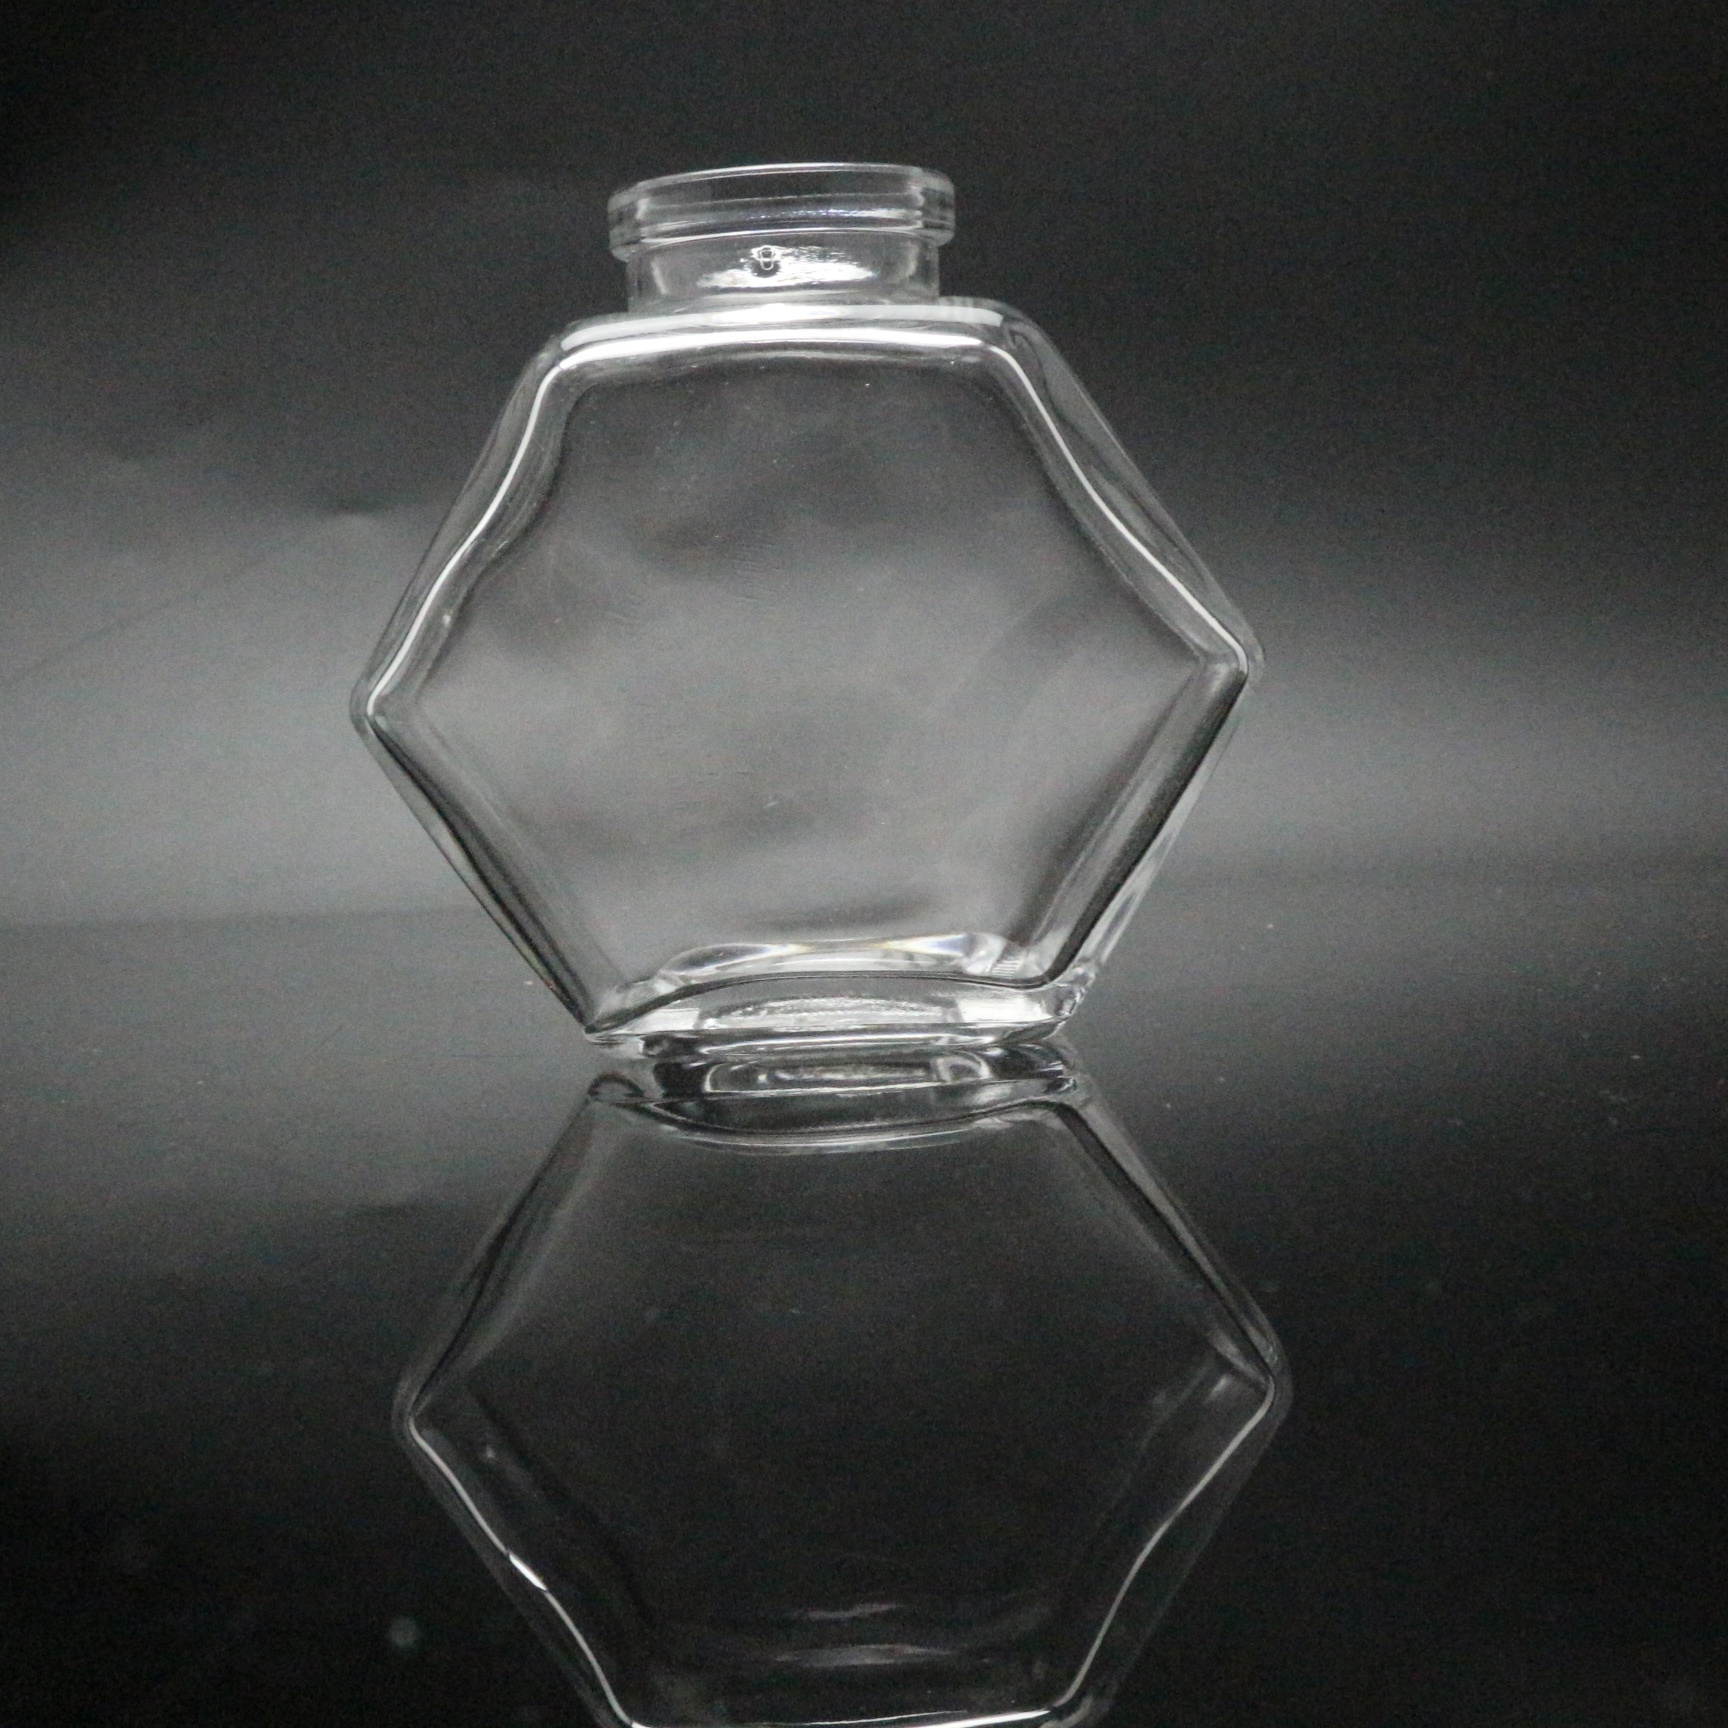 shanghai linlang hexagonal glass jar wooden lid in bottles jars